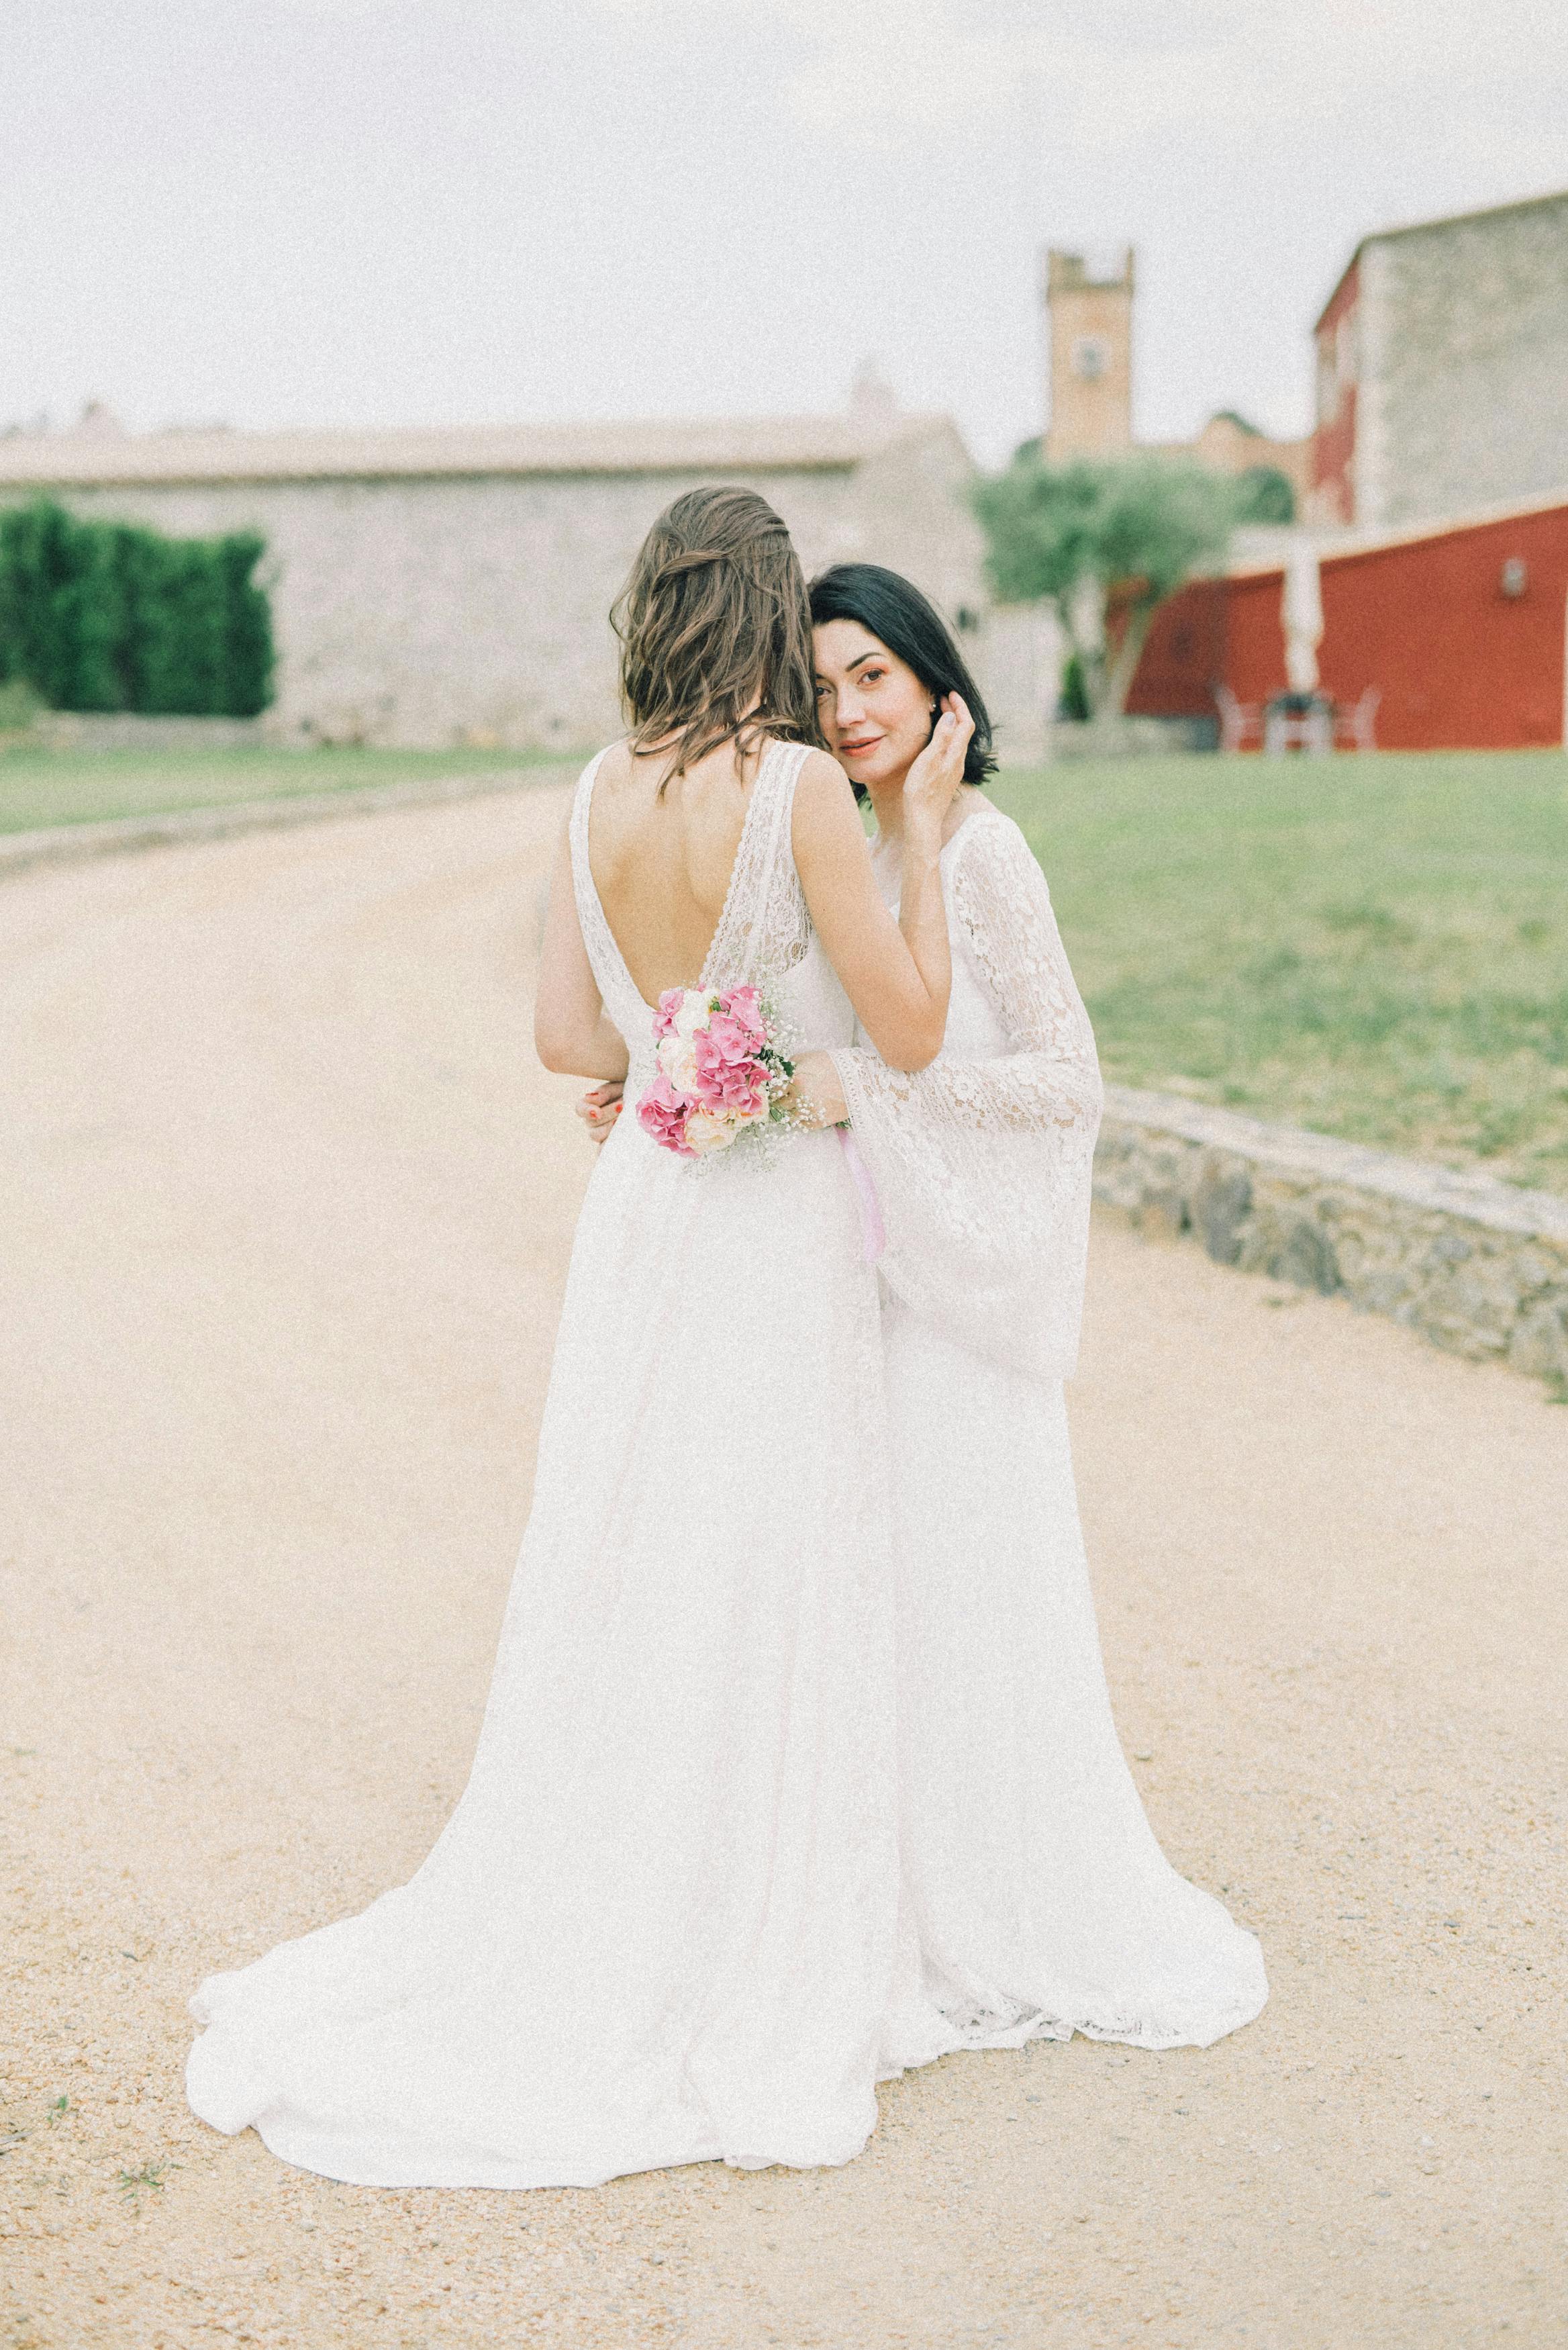 Photo of Women in White Wedding Dress Walking on Grass · Free Stock Photo